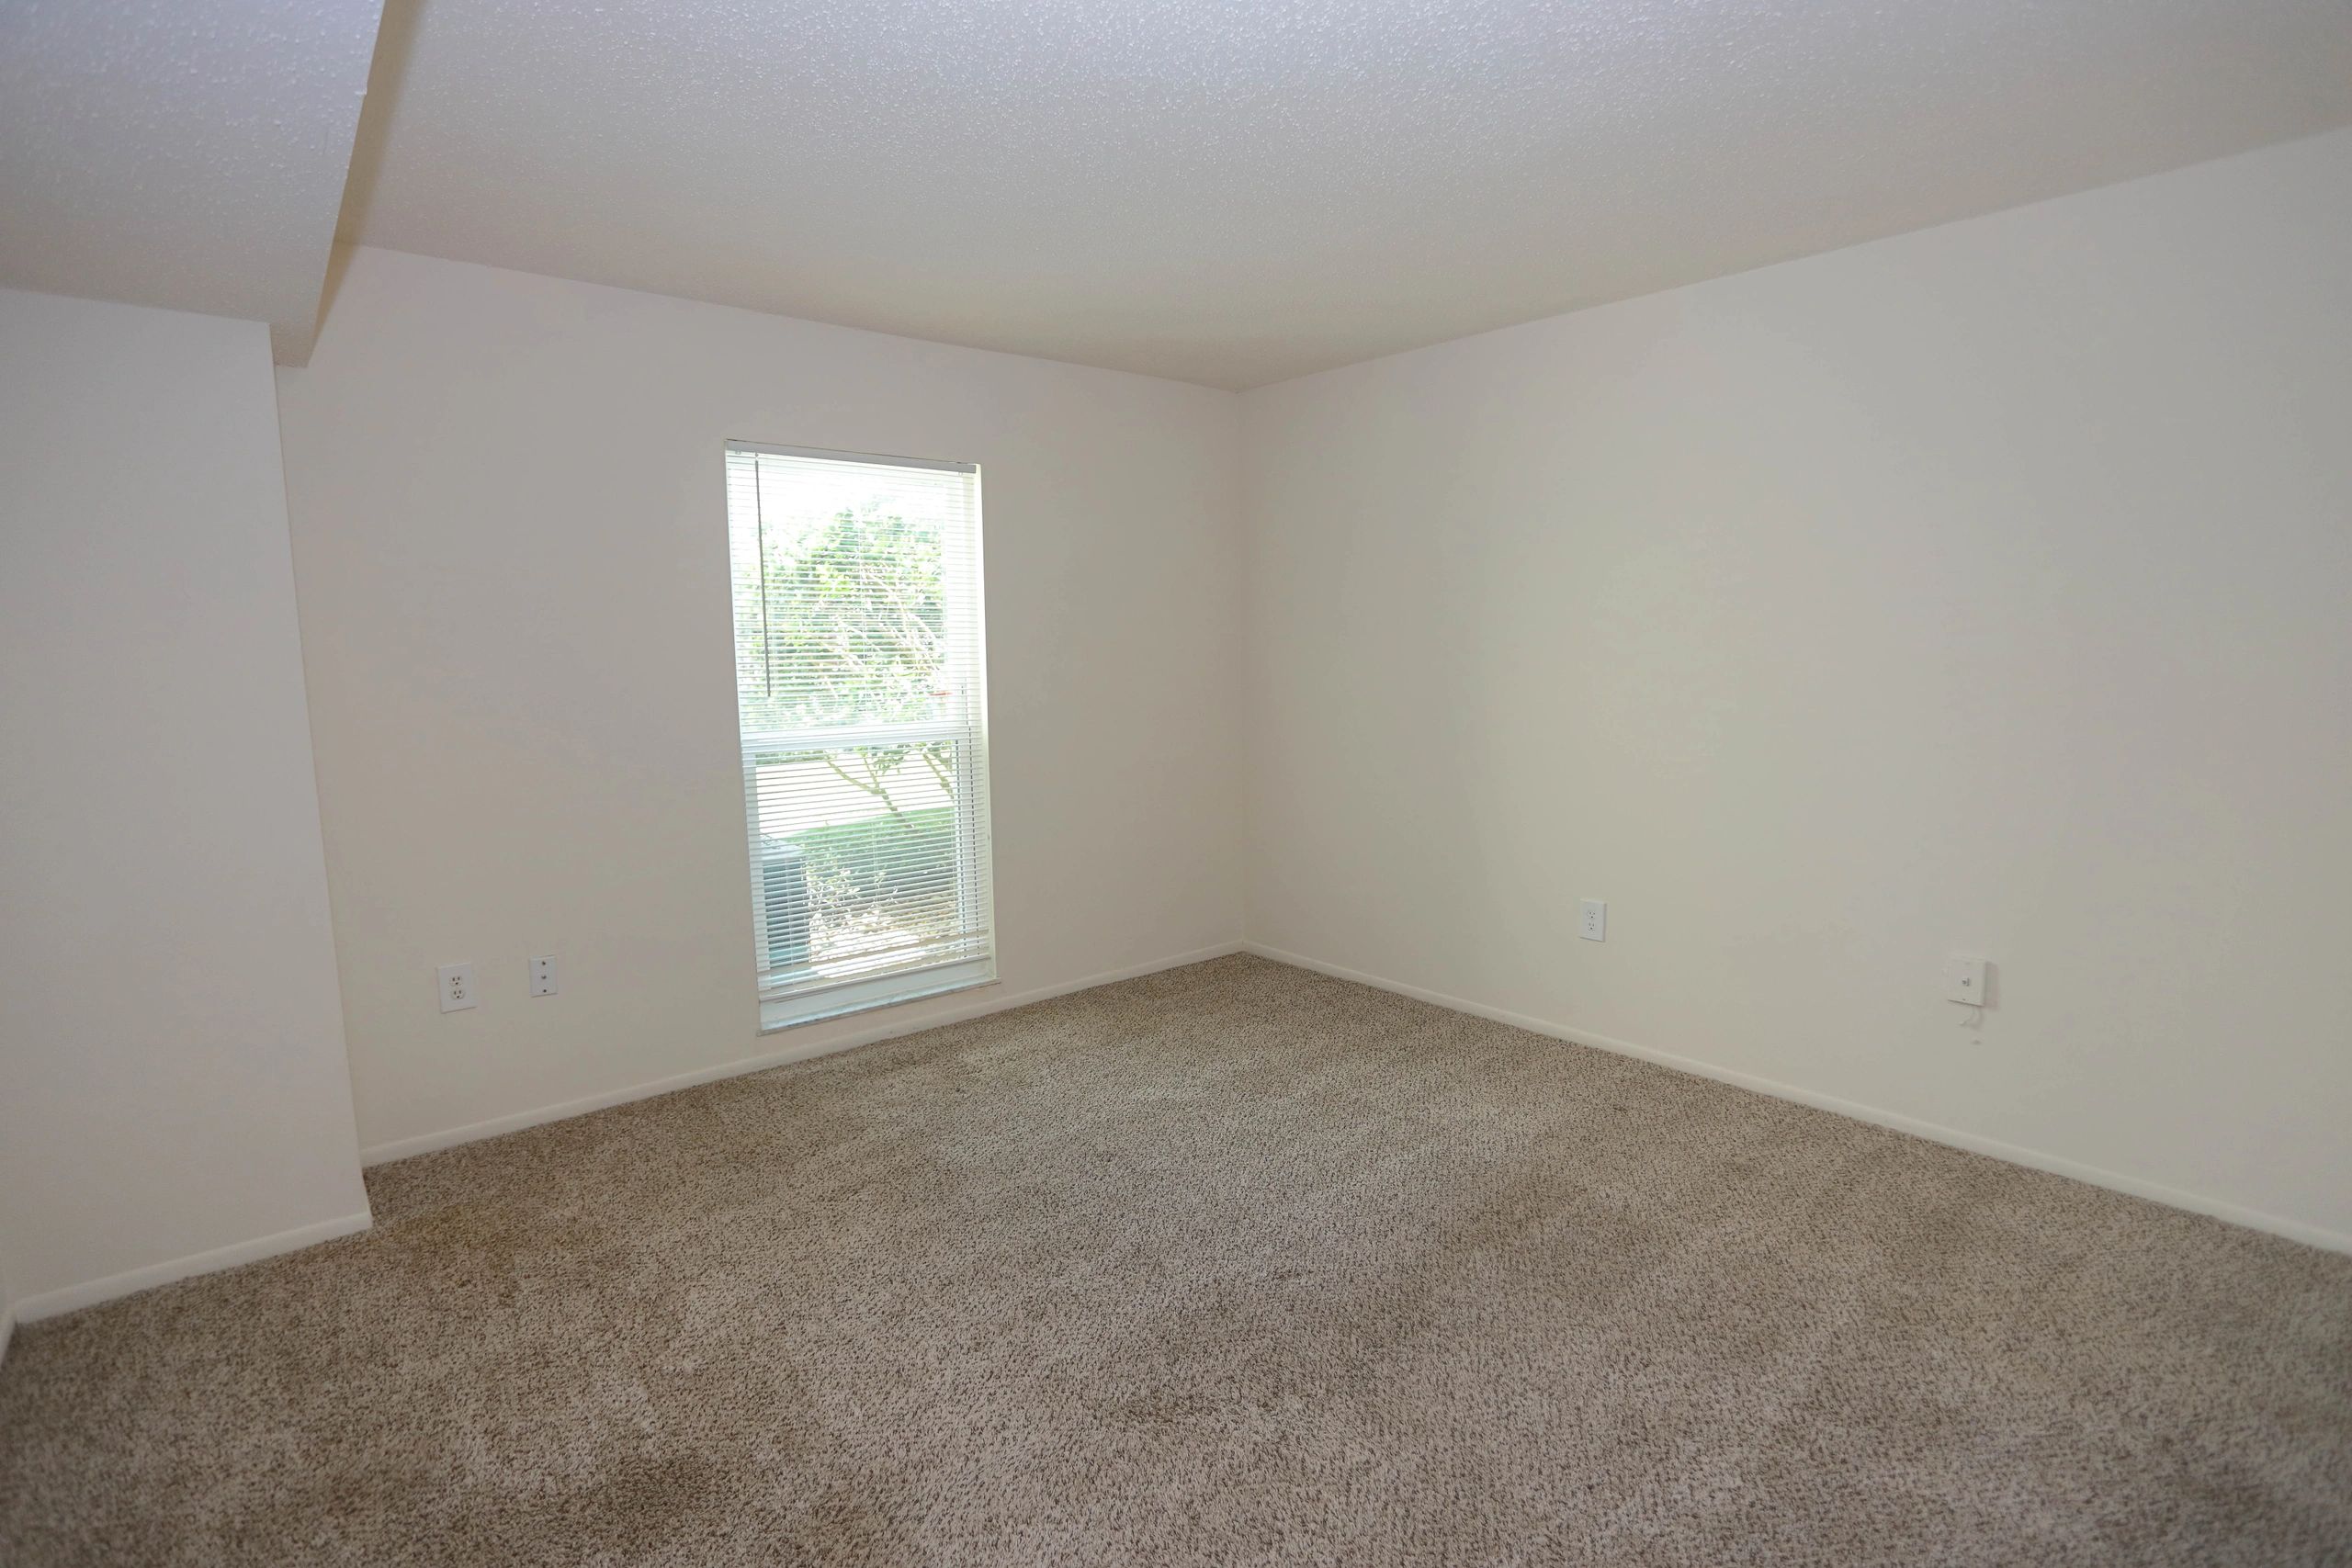 First floor bedroom with carpet.